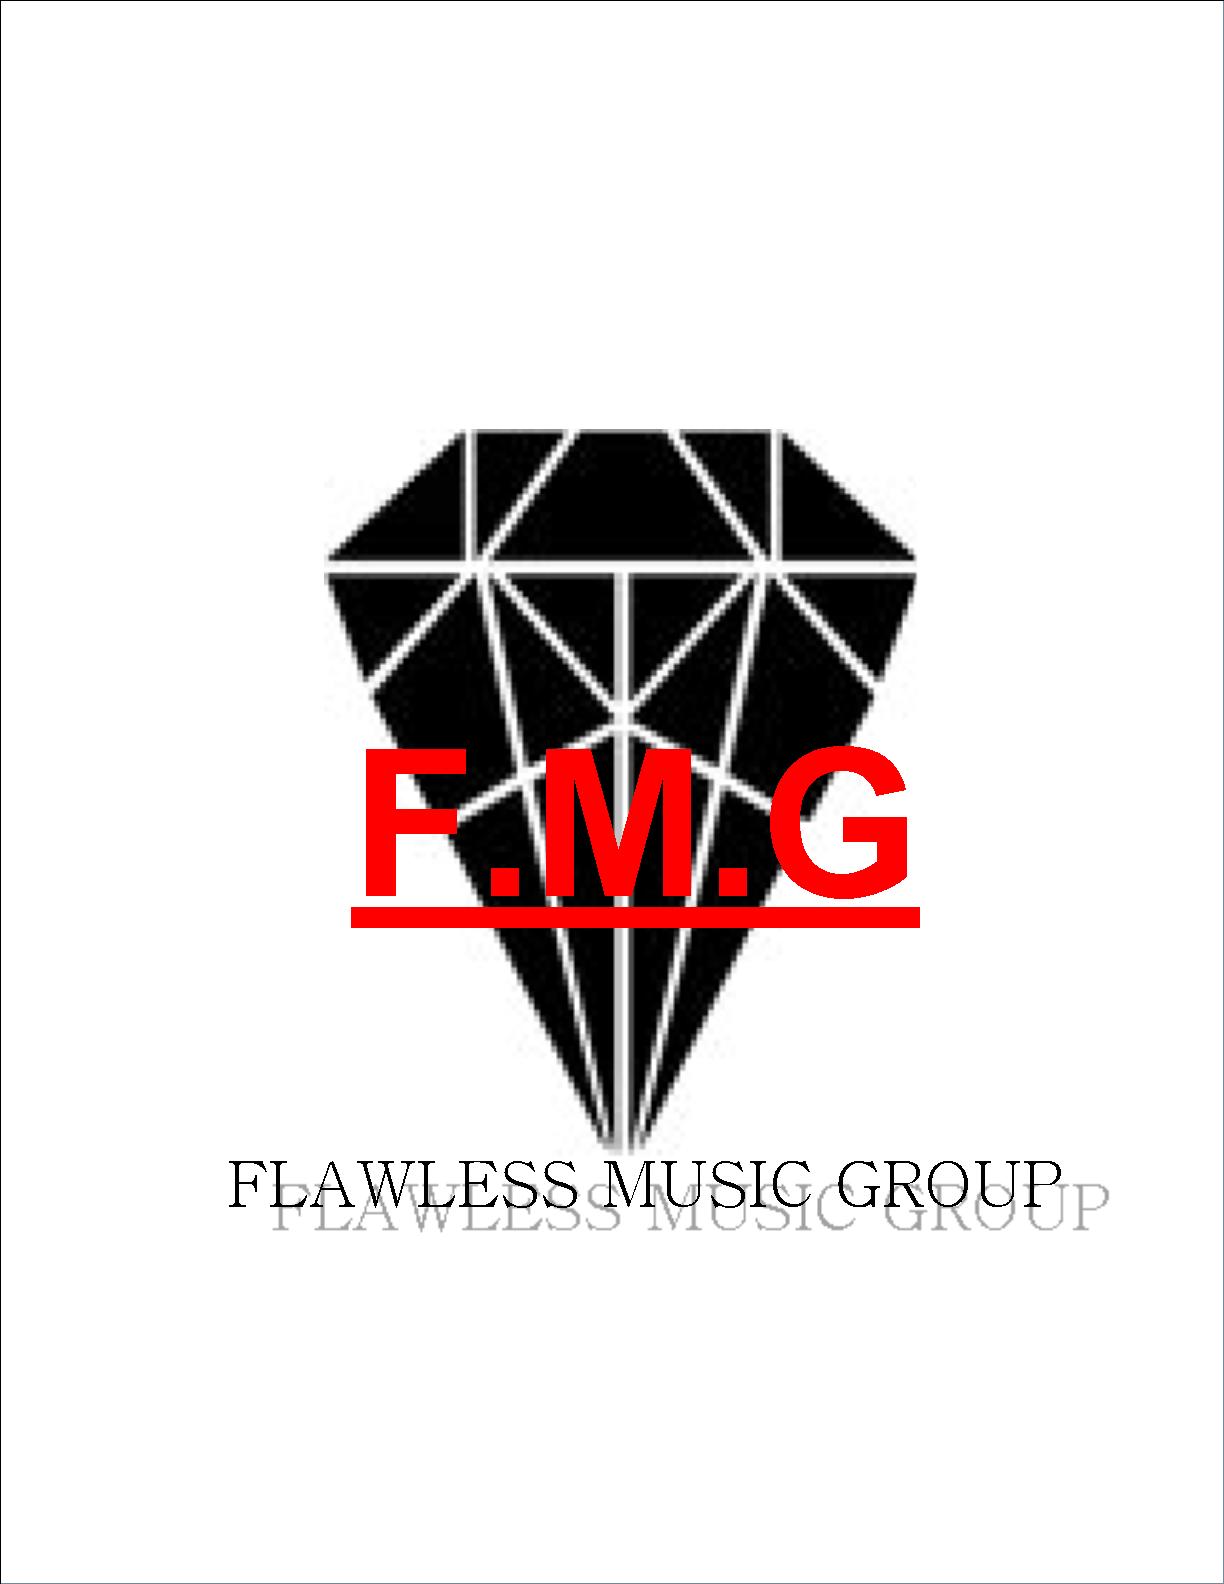 Flawless Music Group's logo